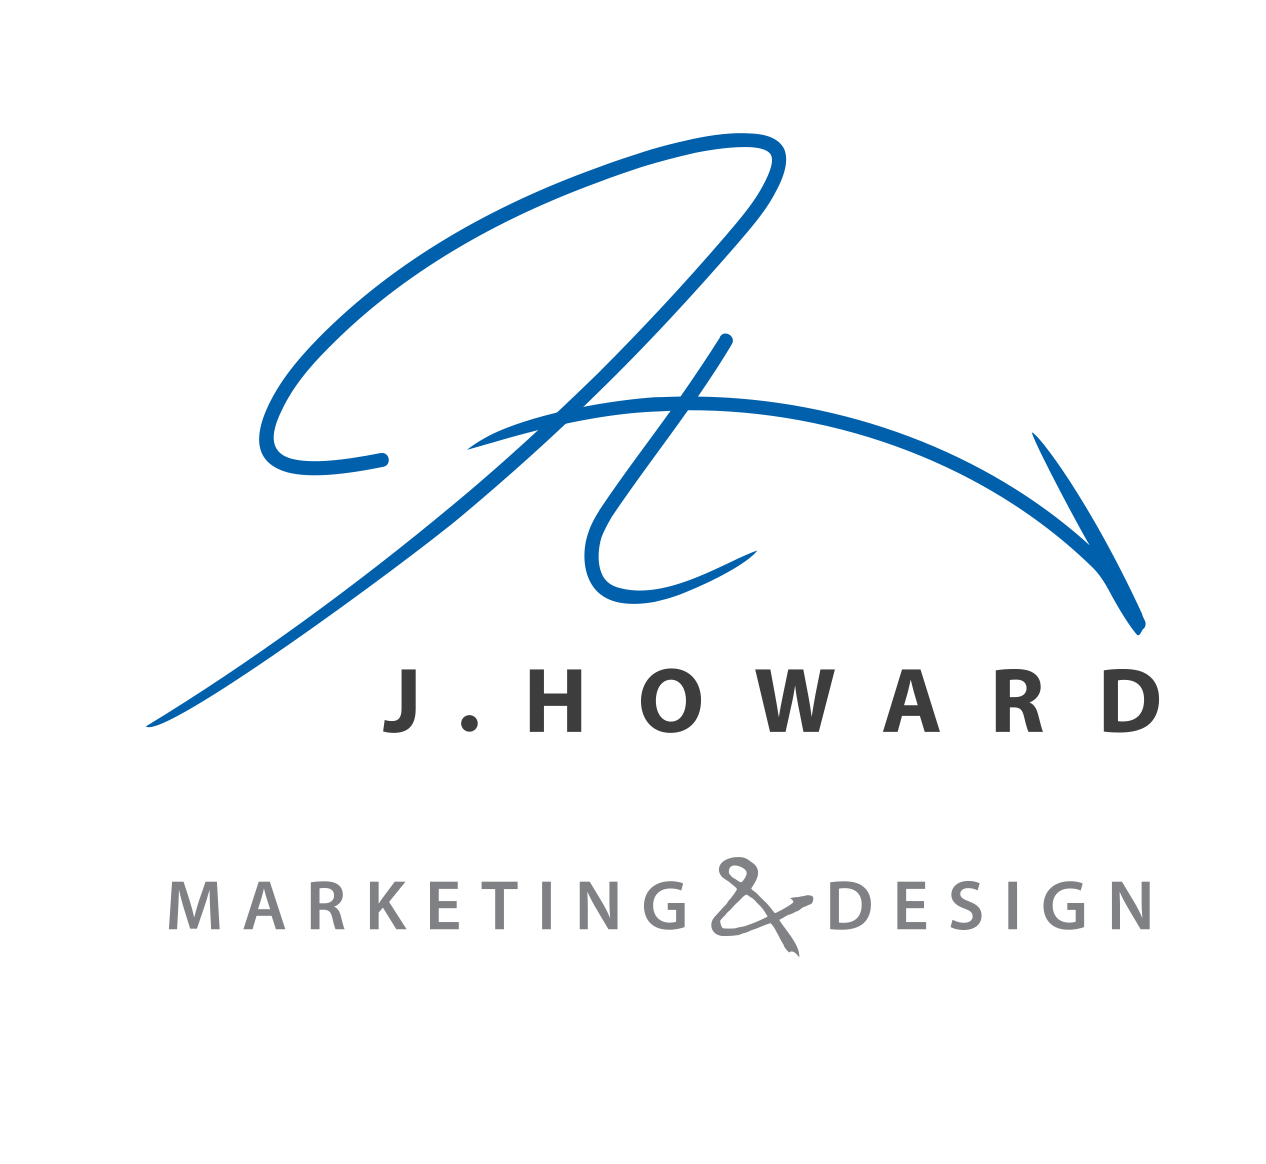 JHoward logo 22